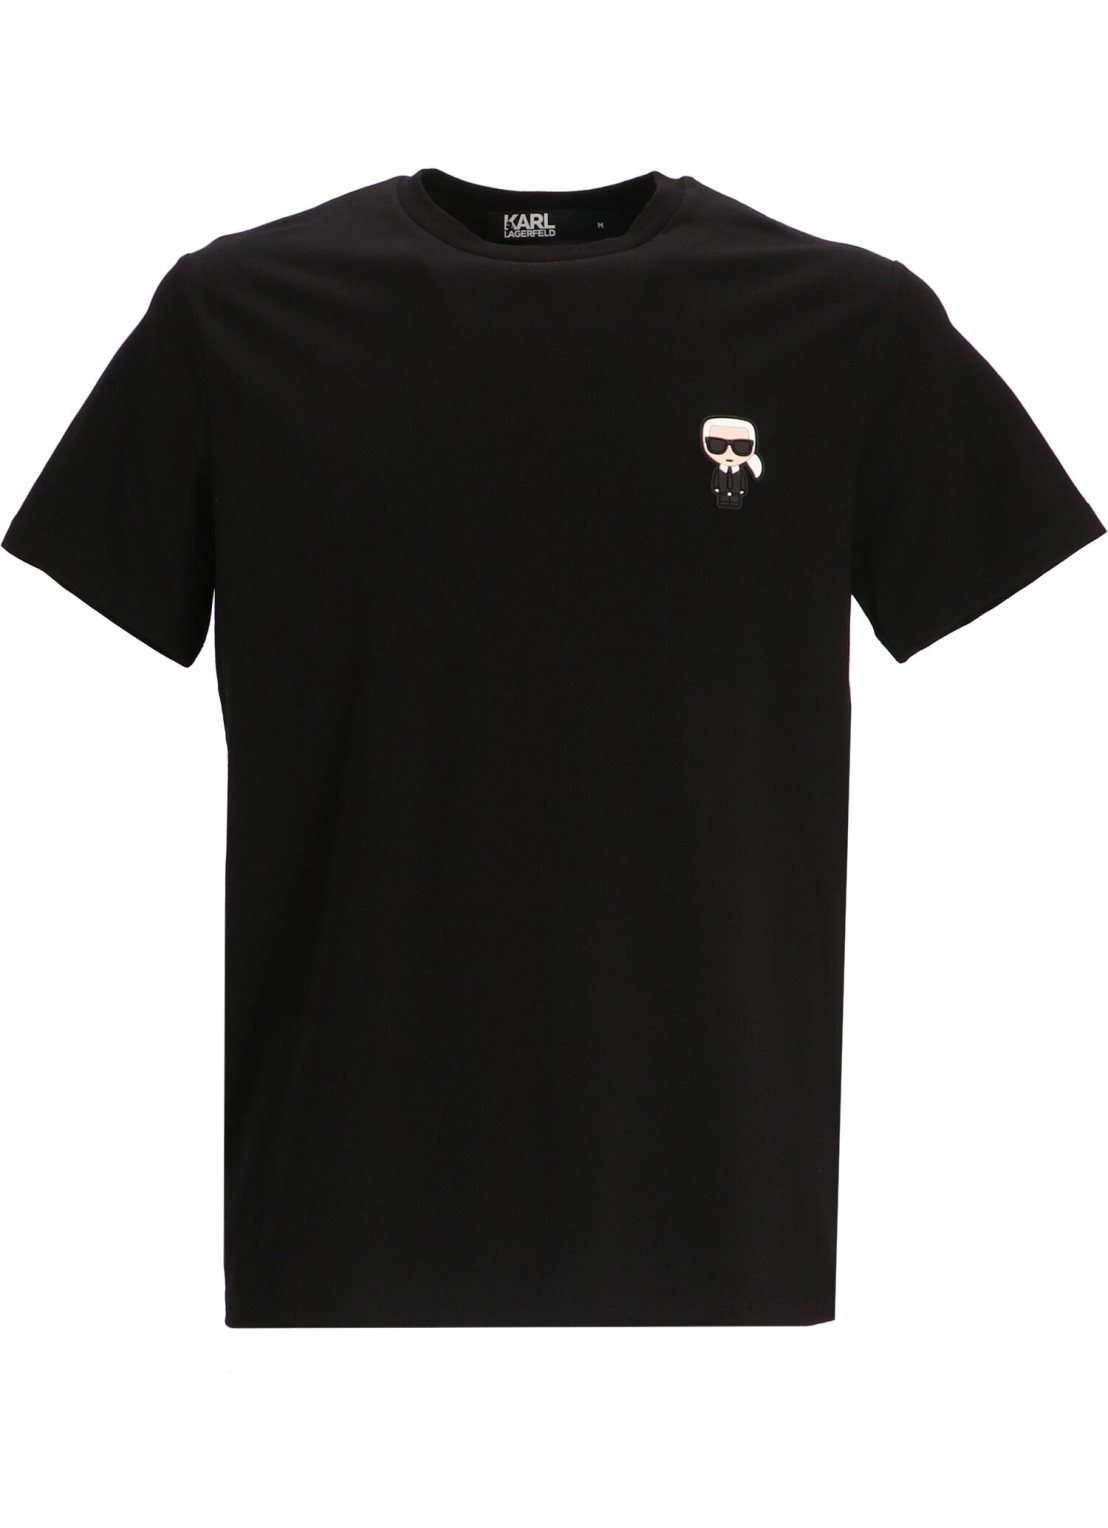 Camiseta karl lagerfeld t-shirt man t-shirt crewneck nos 755027500221 990 talla XXL
 